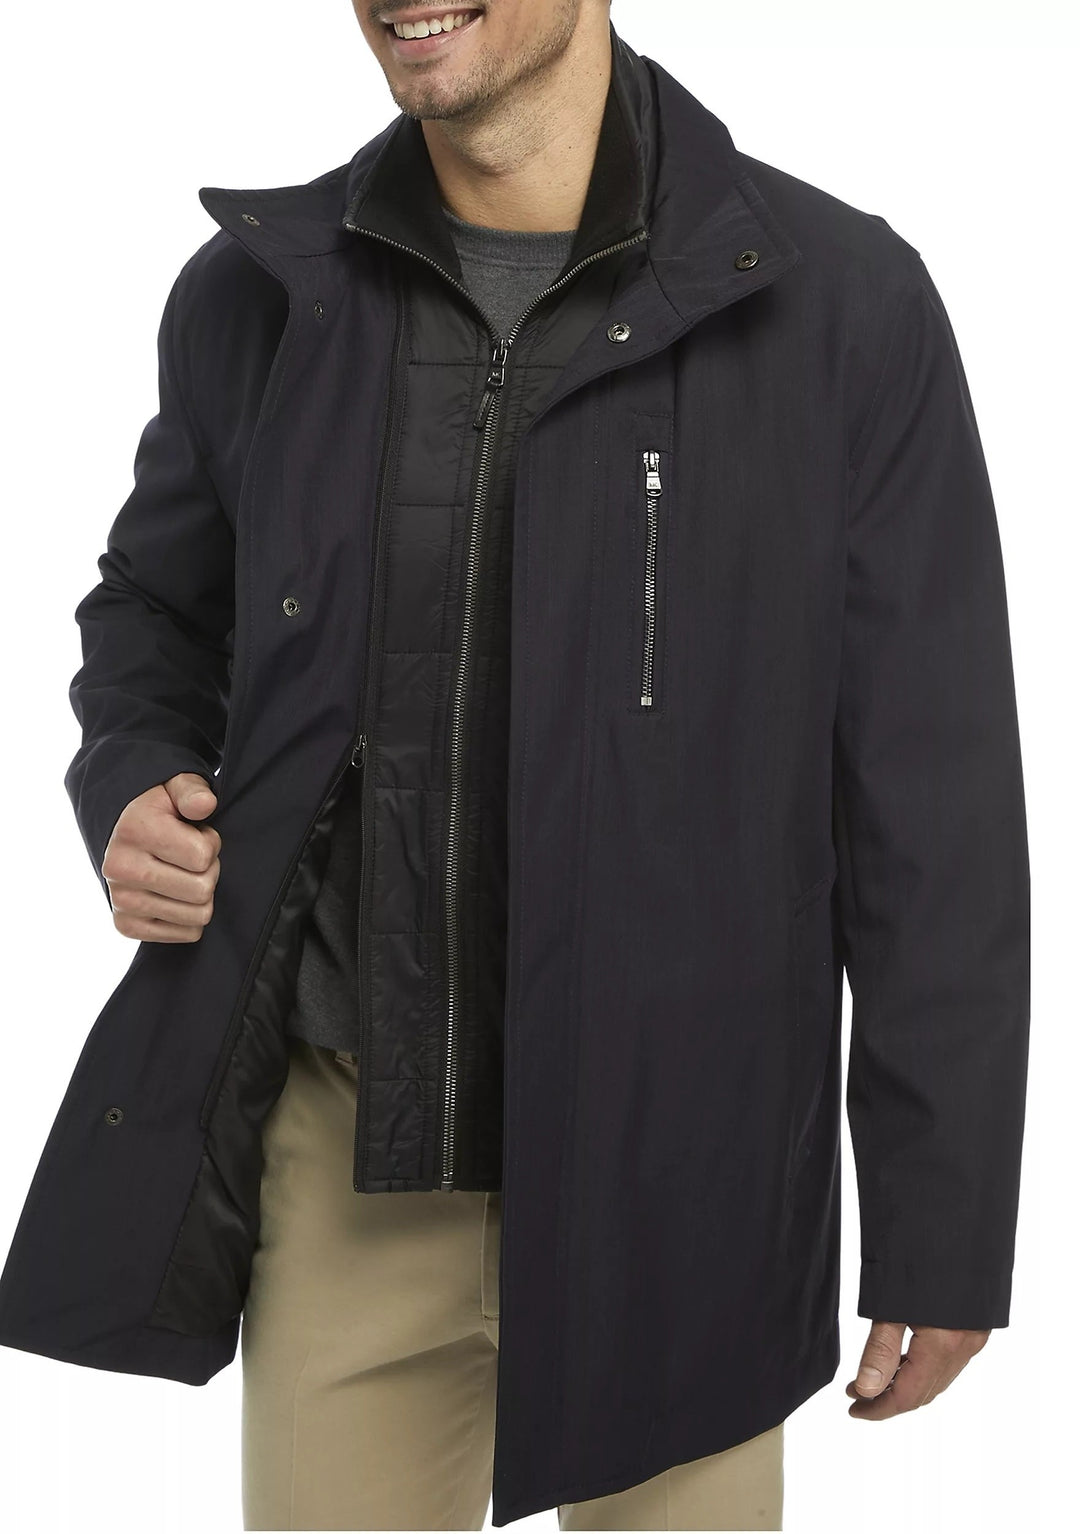 Michael Kors Mens Slim Fit Raincoat Lightweight Water-Resistant Windbreaker Rain Jacket